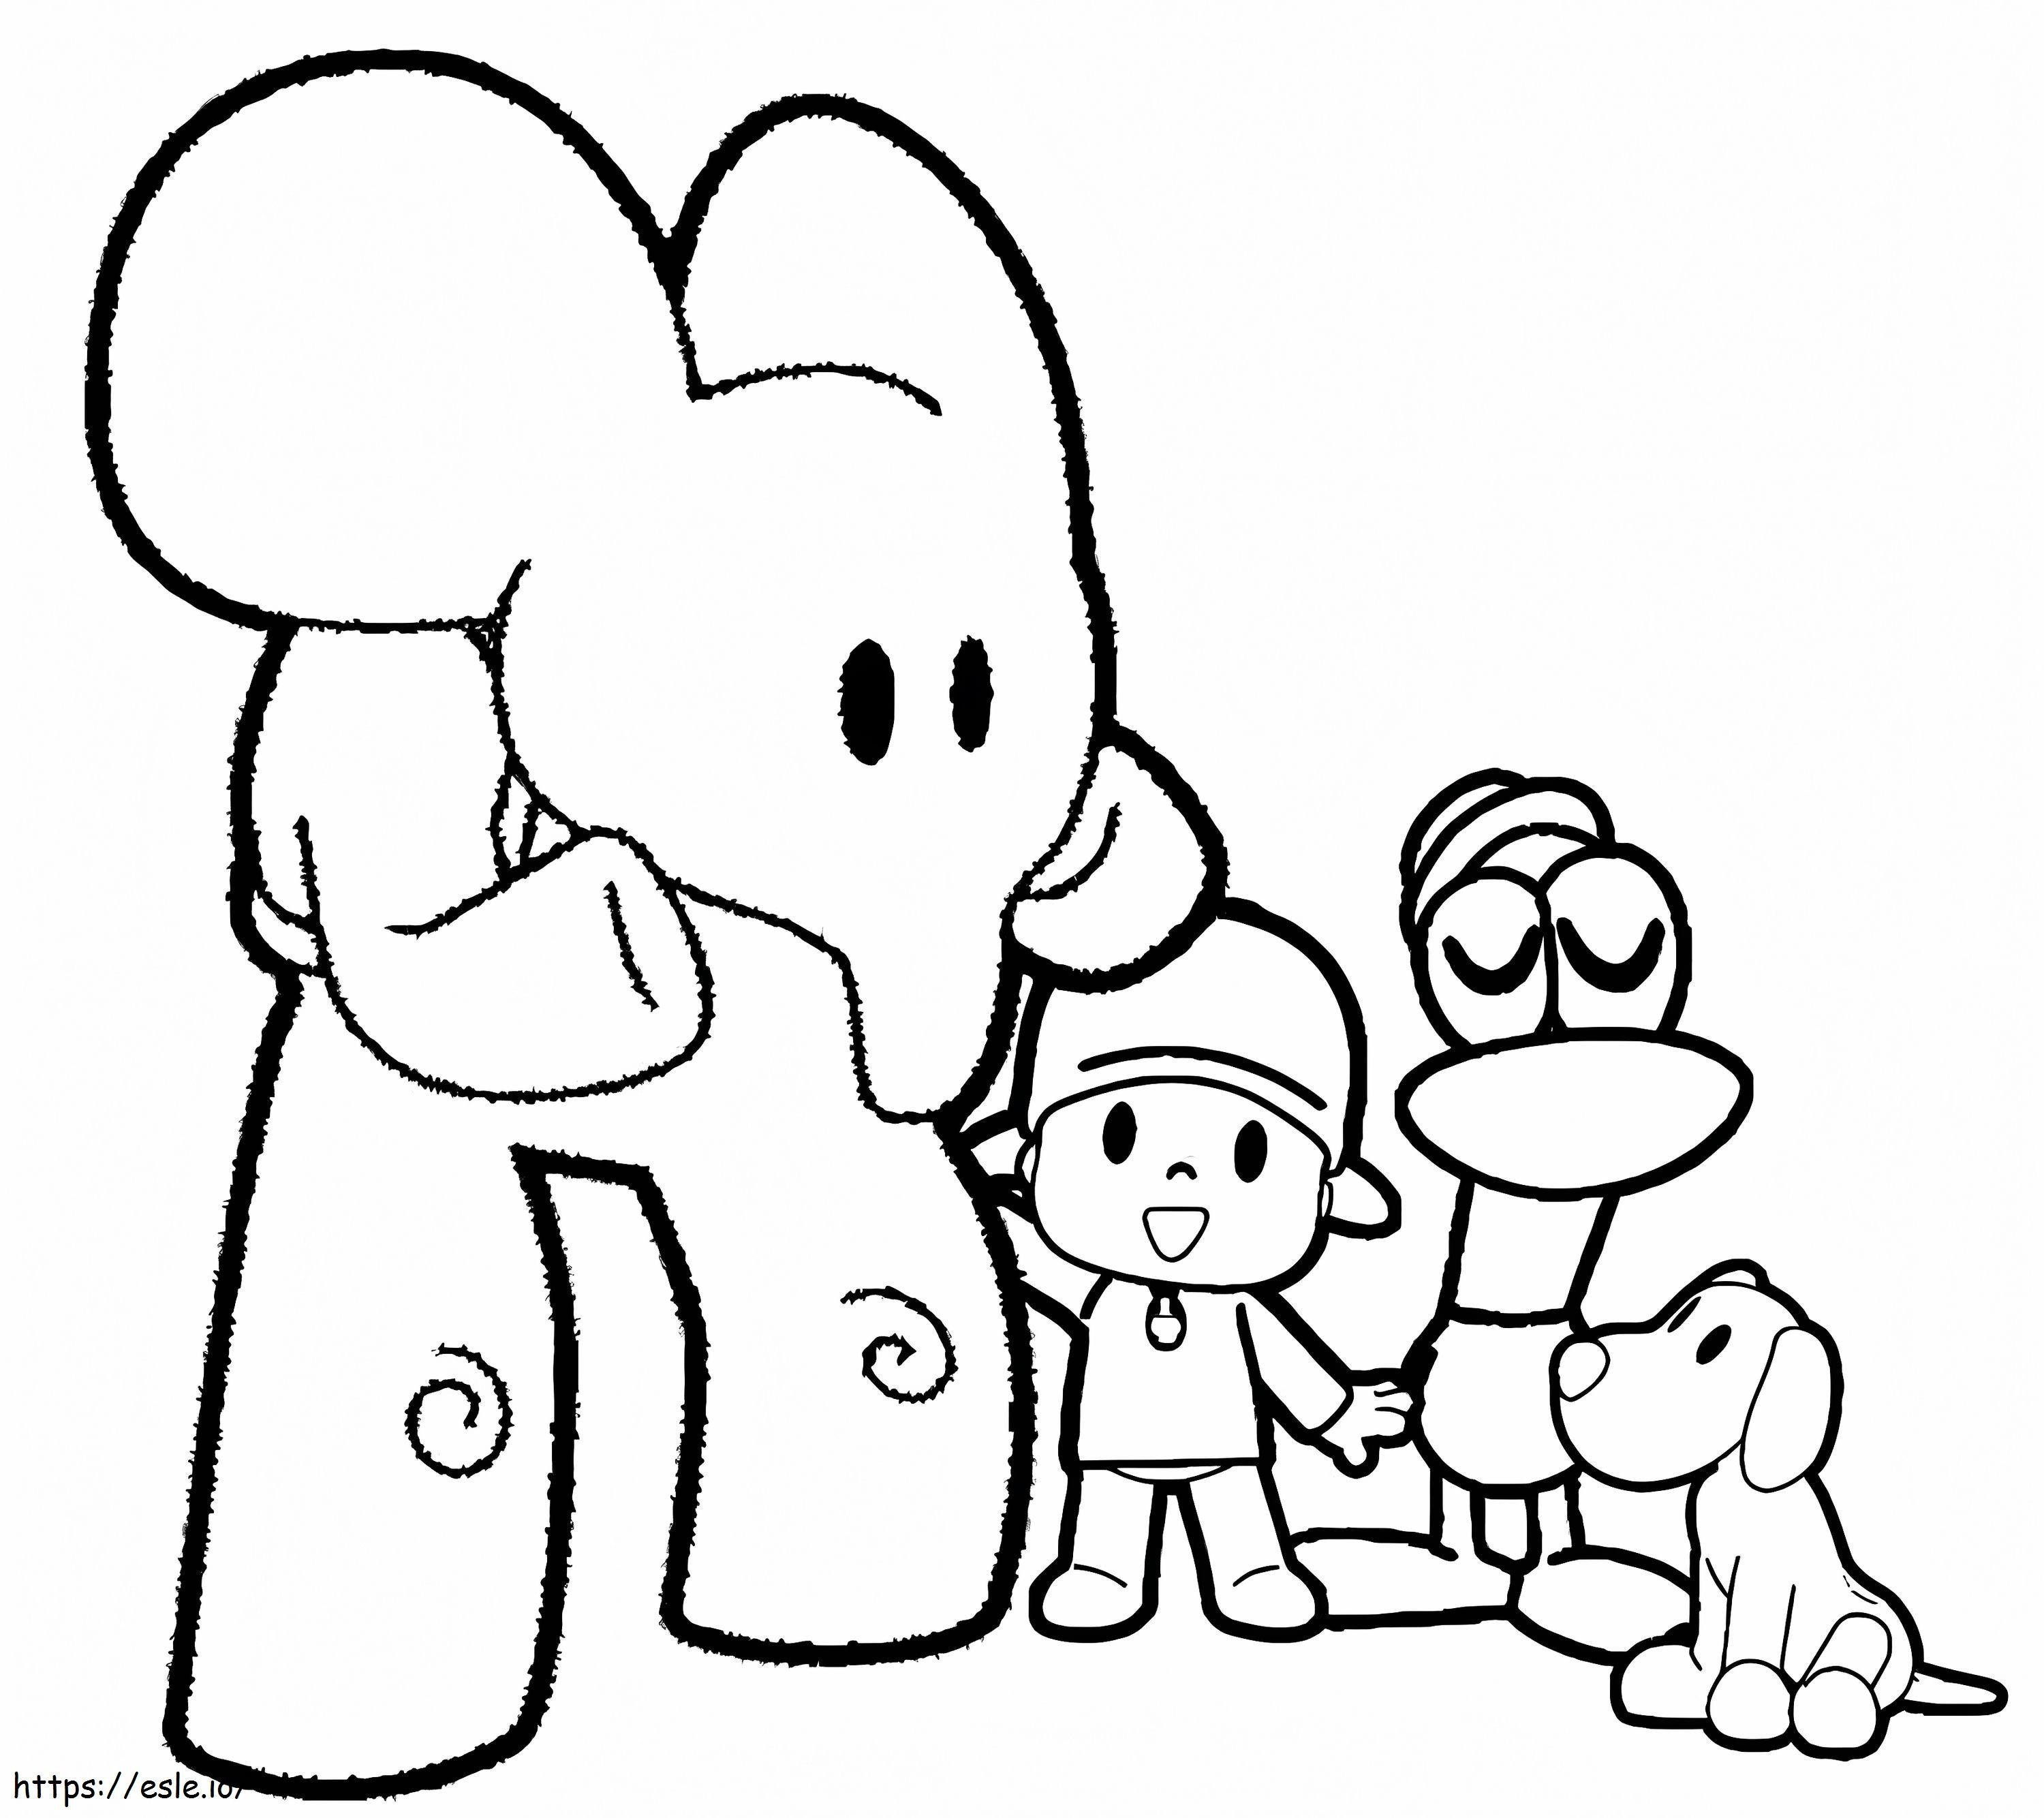 Pocoyo e seus amigos engraçados para colorir